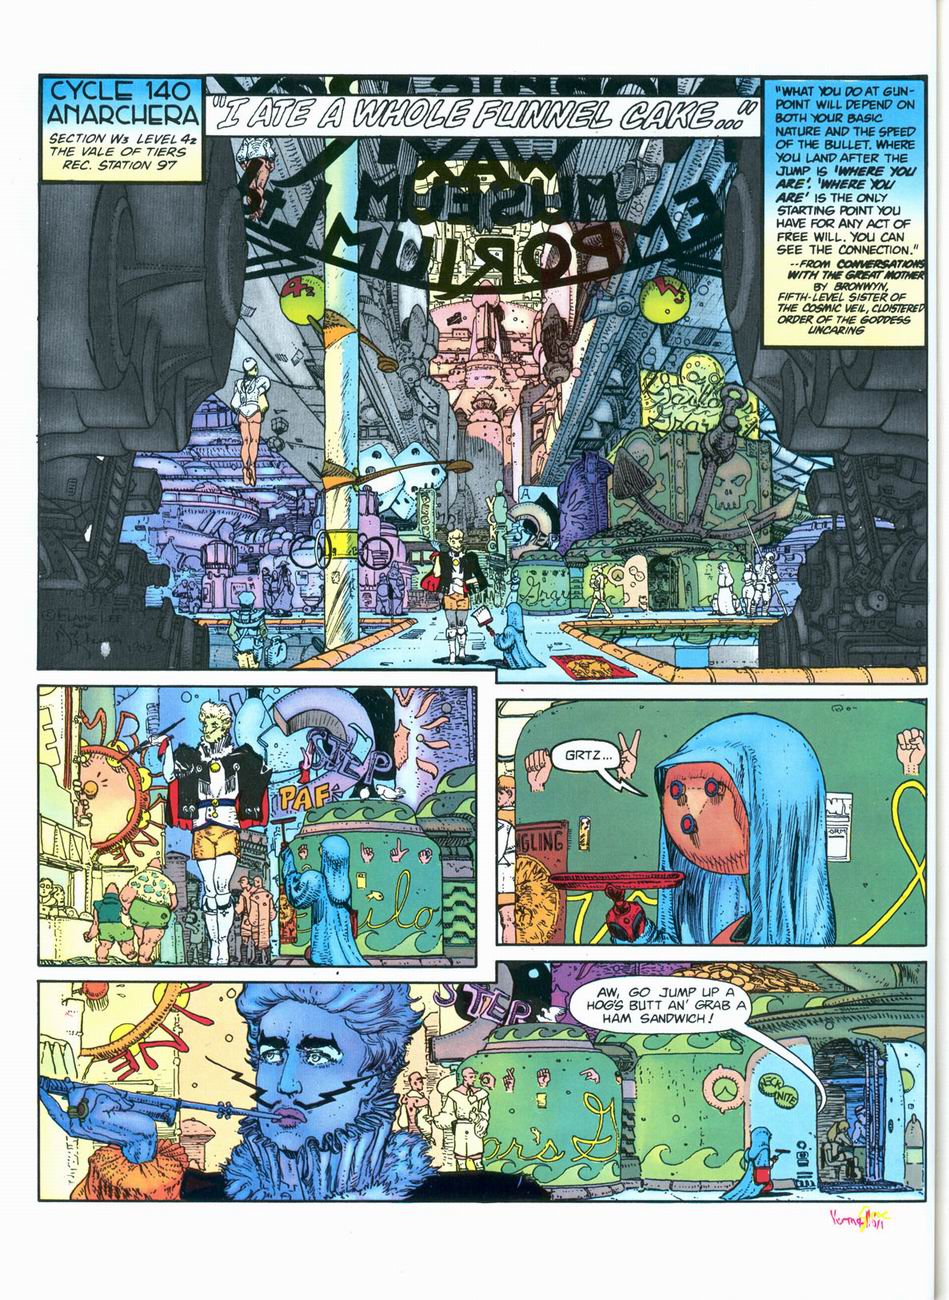 Marvel Graphic Novel issue 13 - Starstruck - Page 61